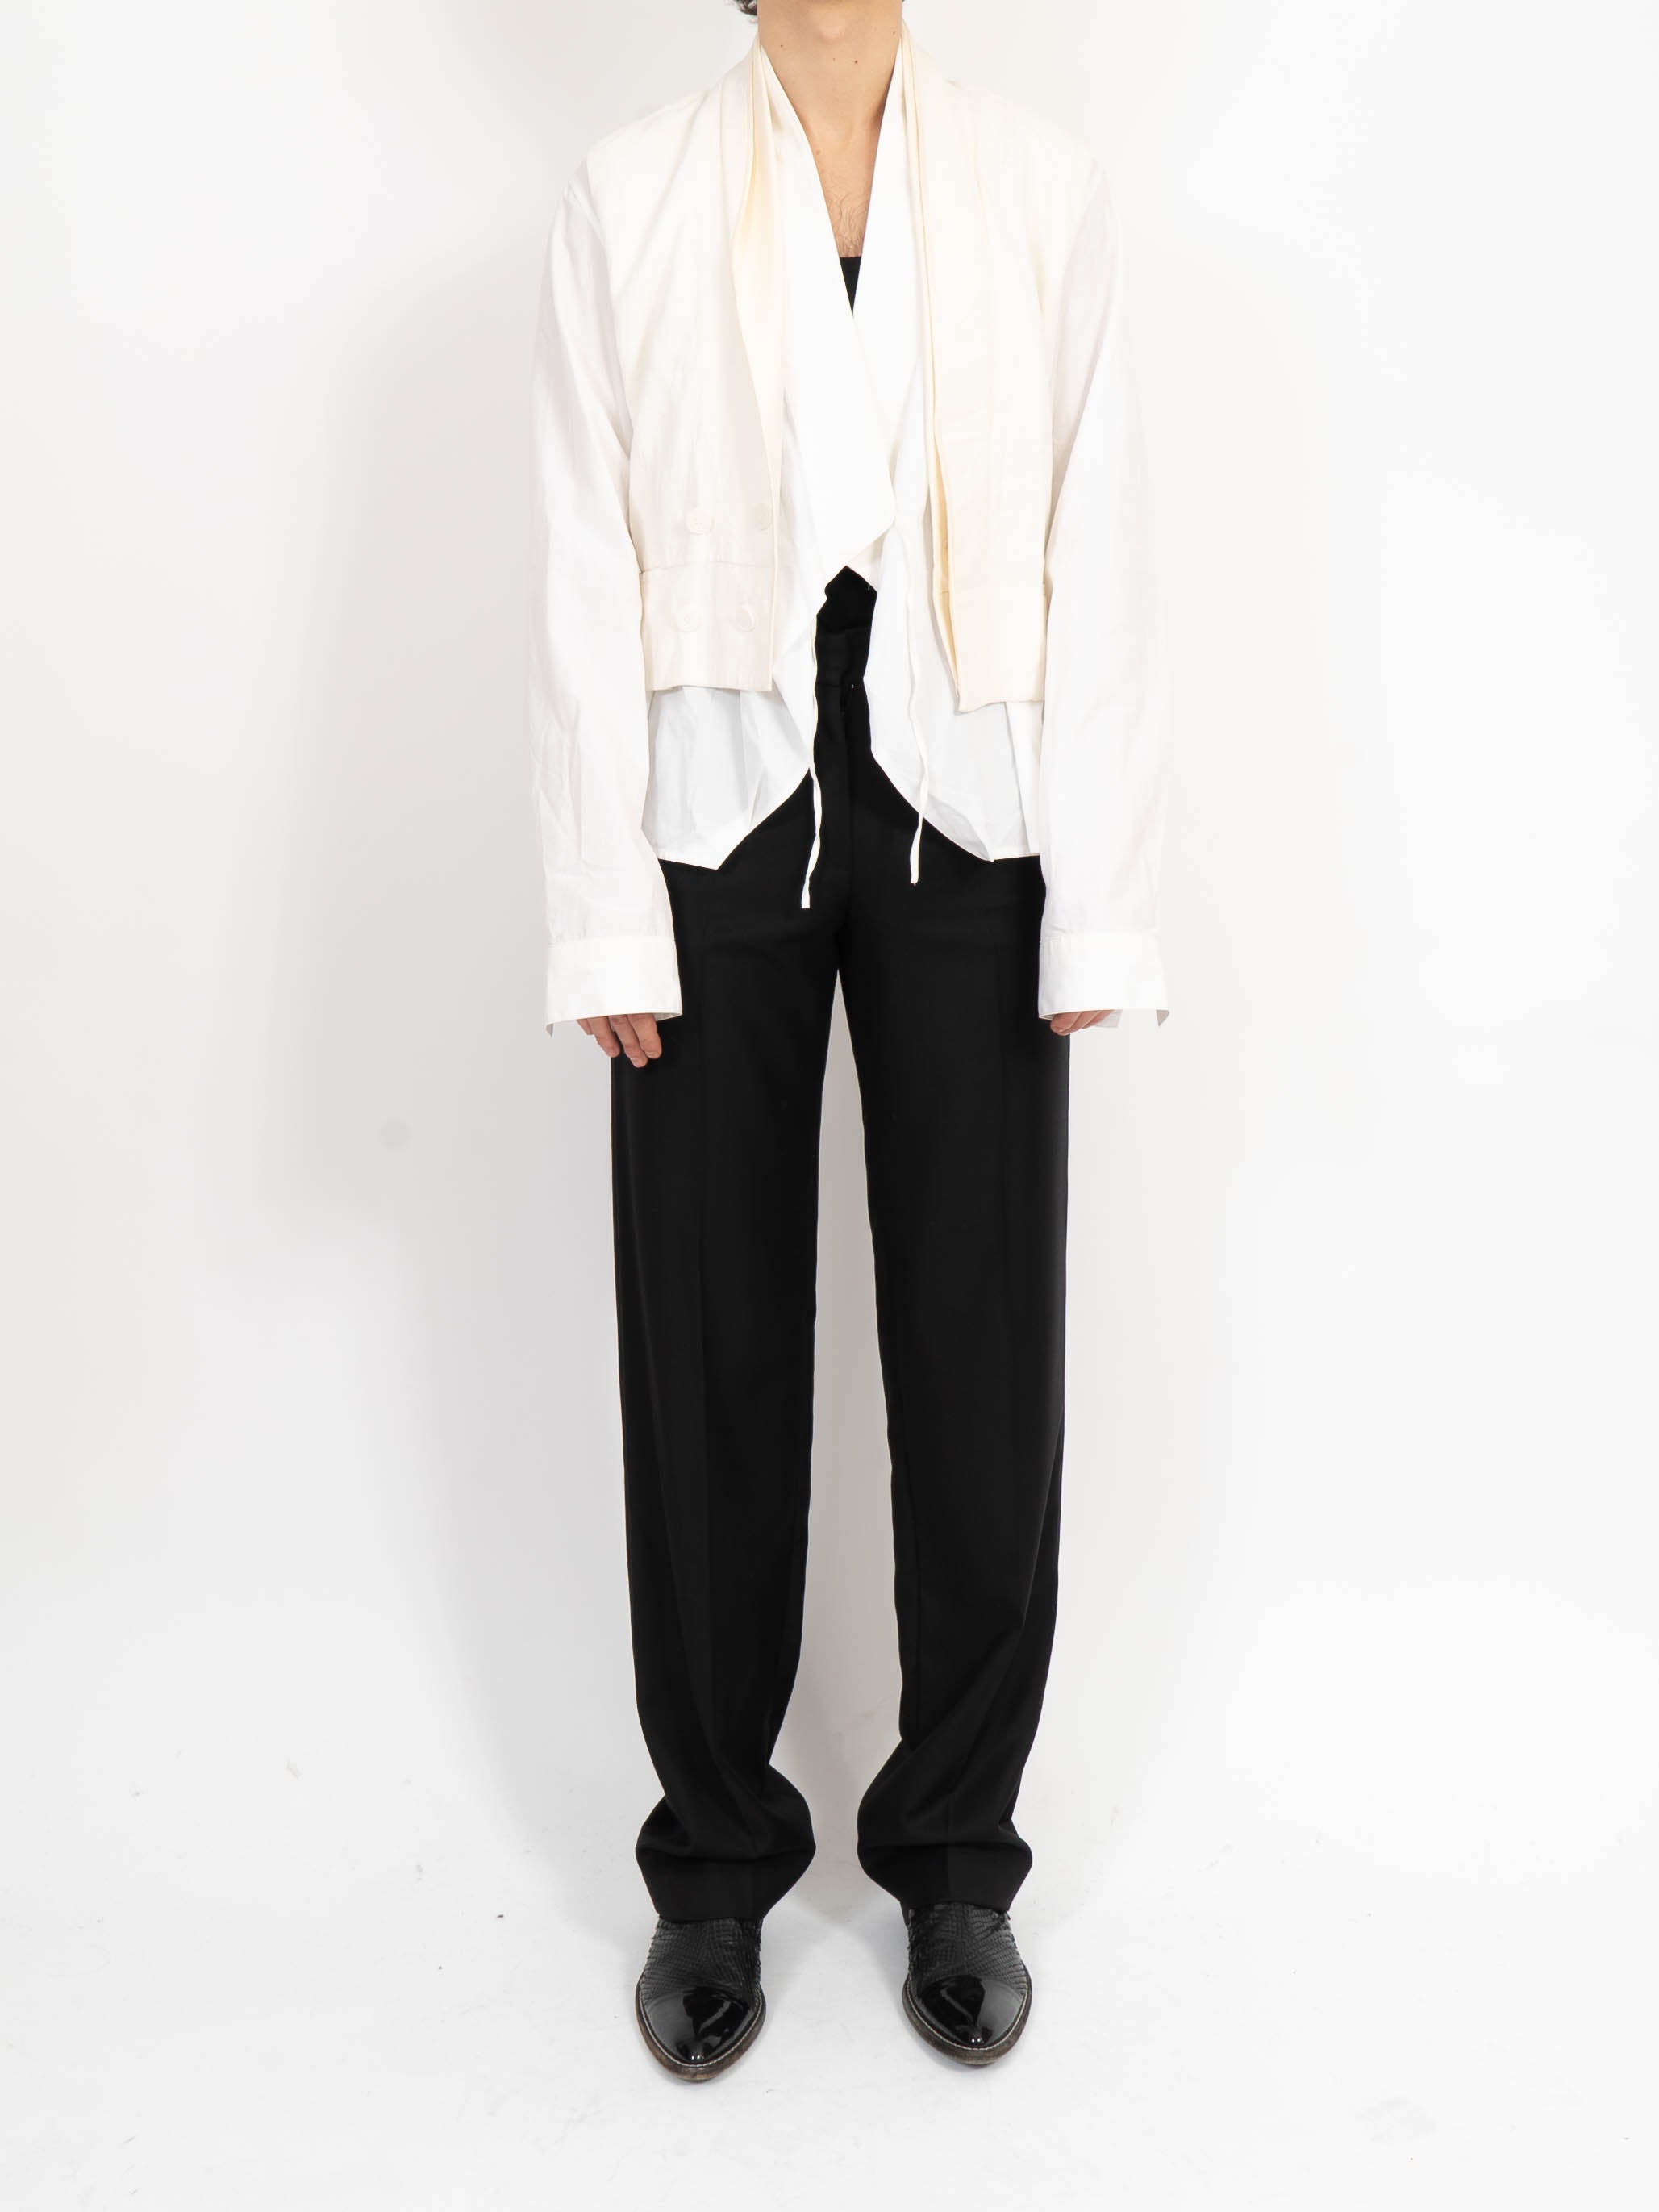 SS16 Kimono Shirt with Waistcoat White 1 of 1 Sample